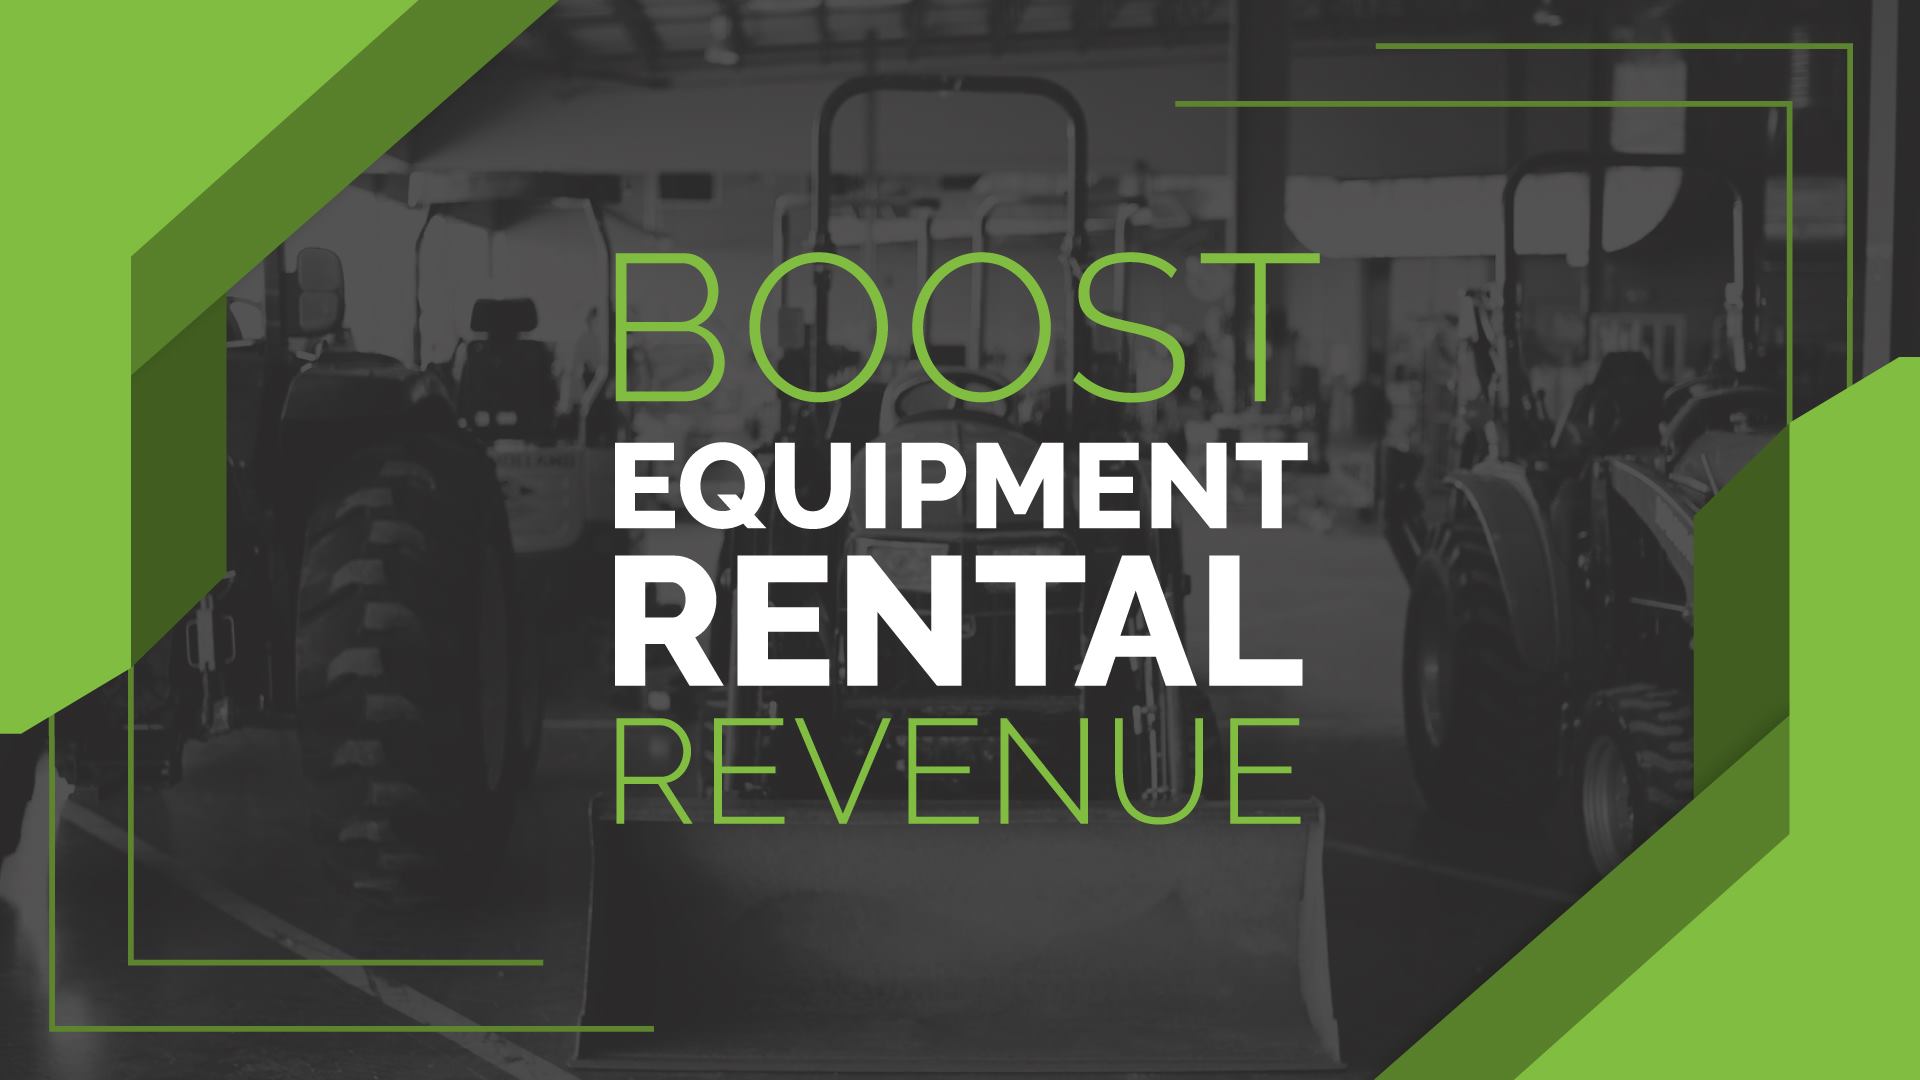 Boost Equipment Rental Revenue in three easy steps